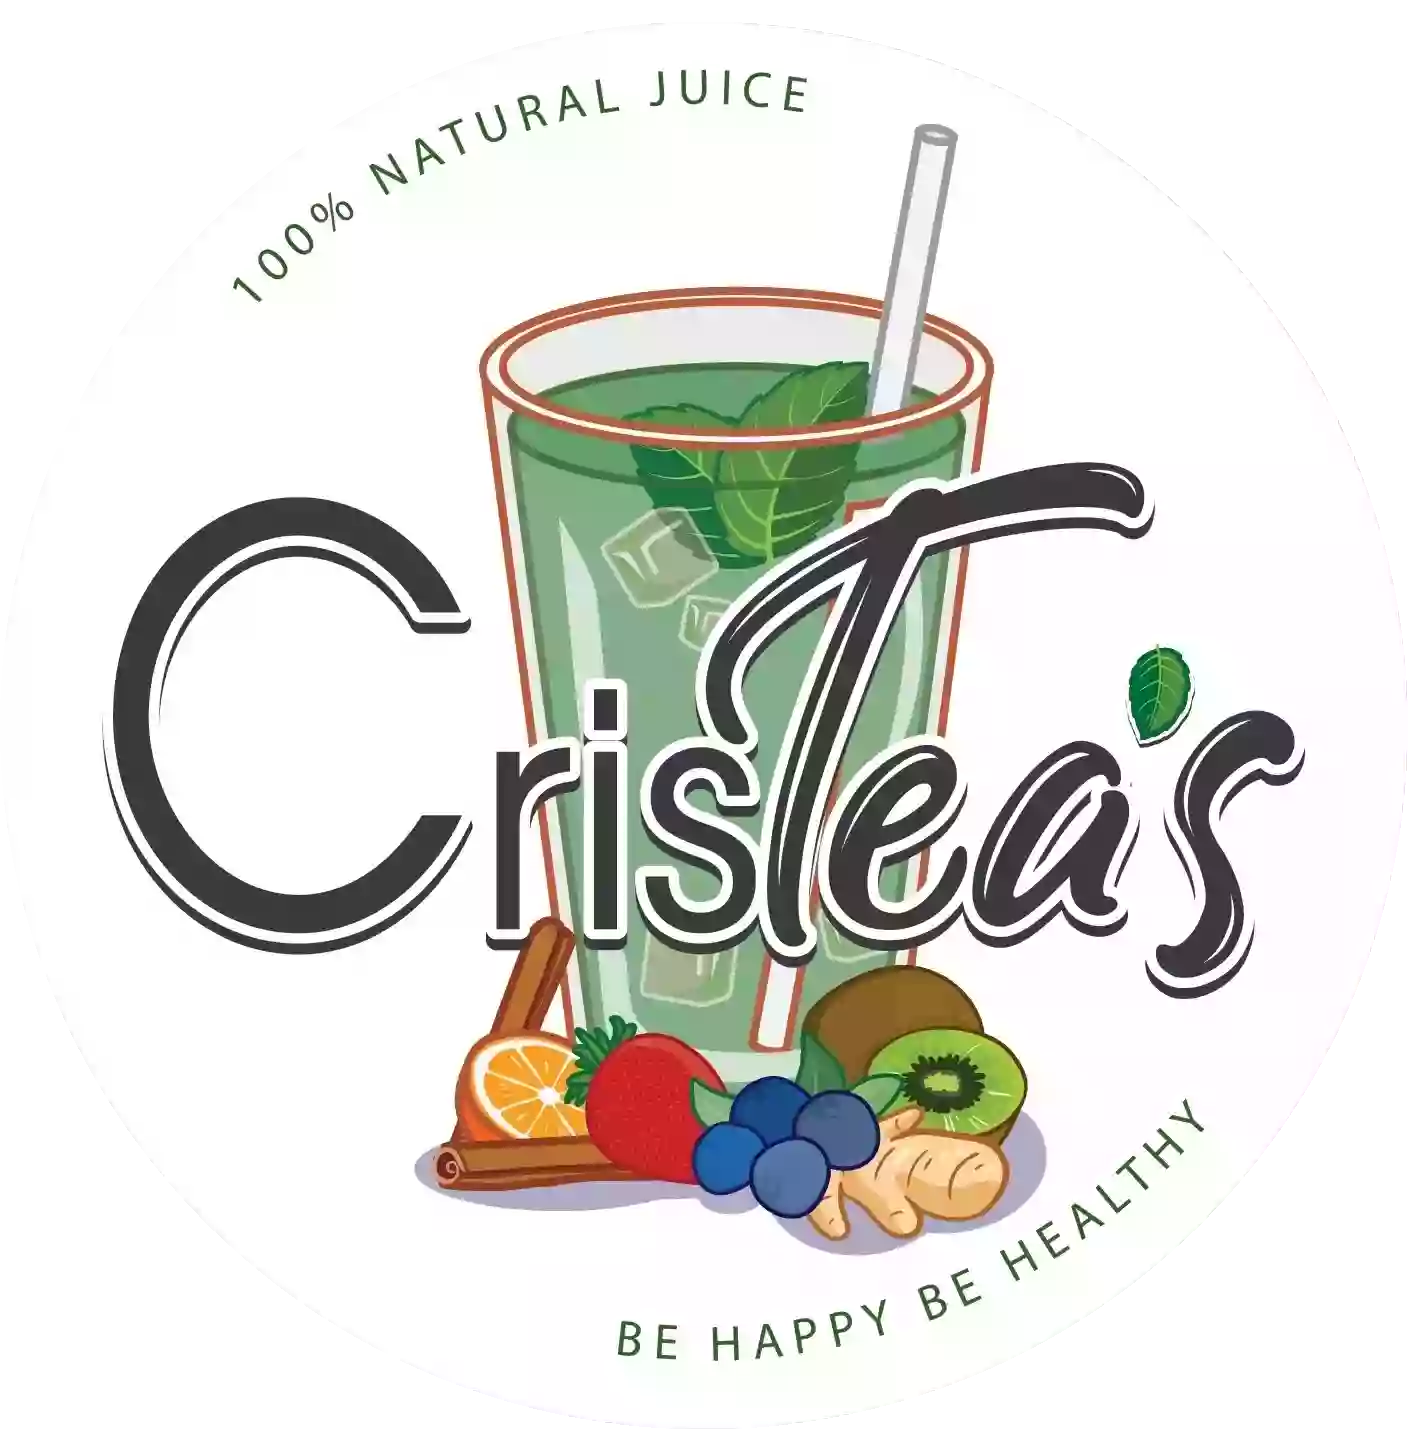 CrisTea's